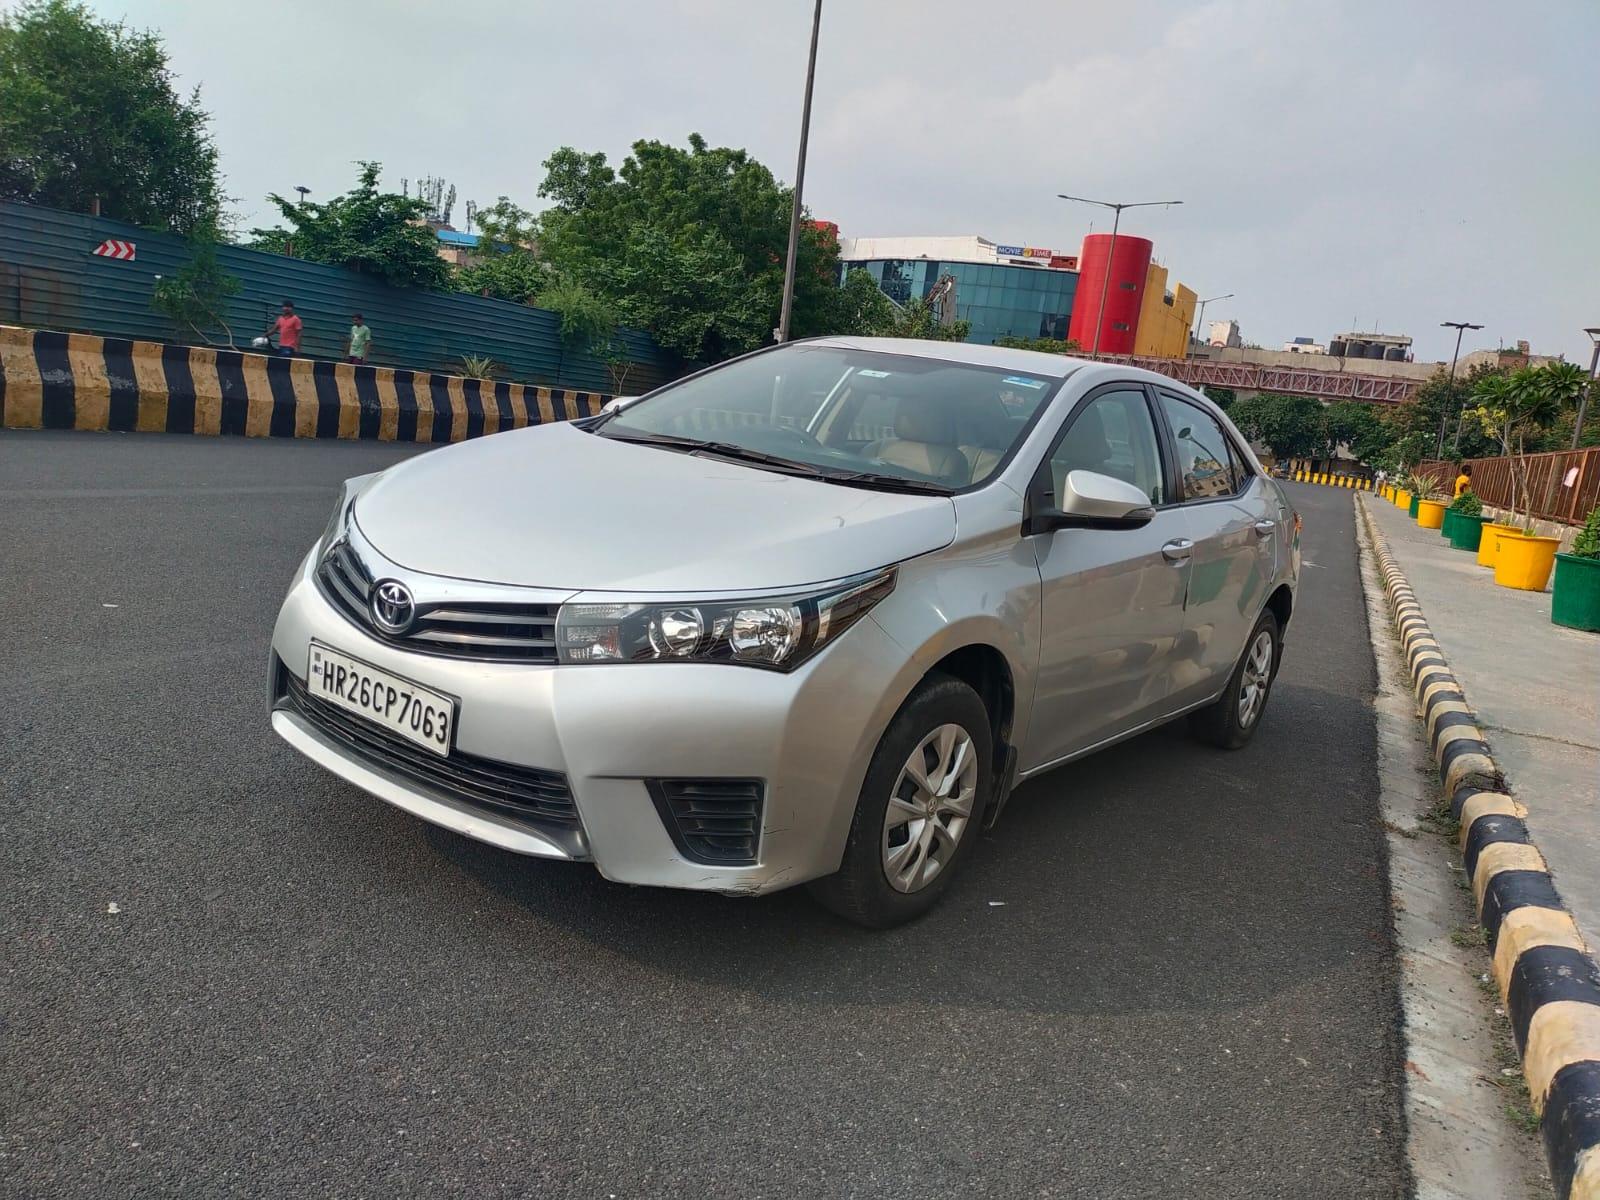 Used 2015 Toyota Corolla Altis